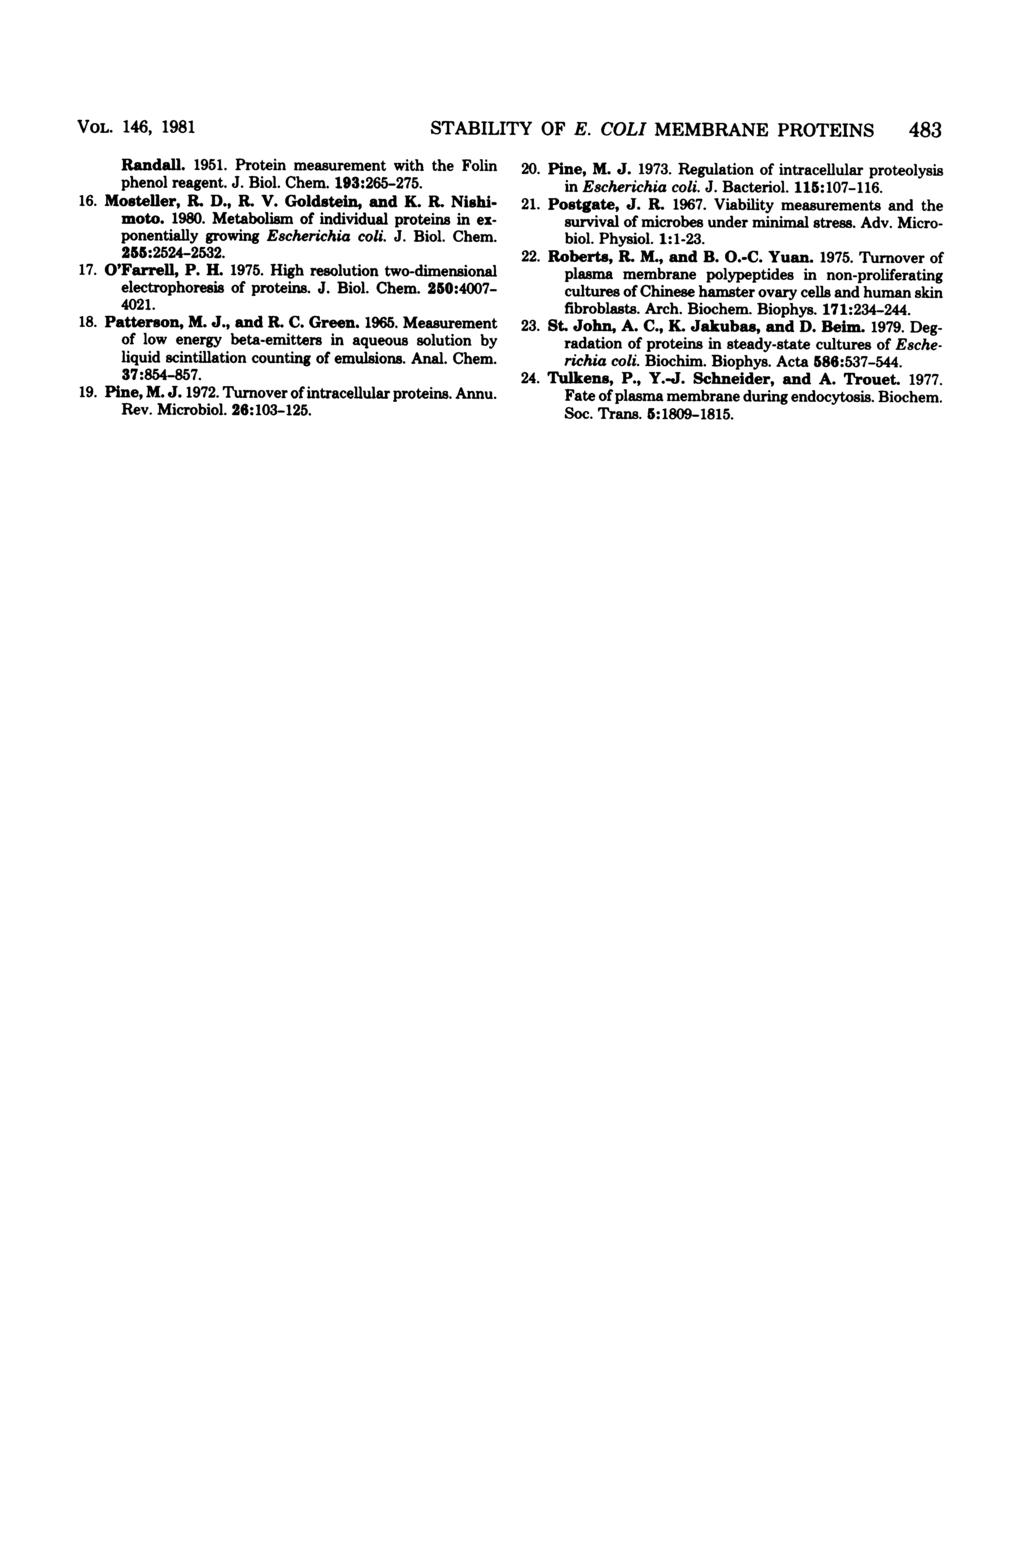 VOL. 146, 1981 Randall. 1951. Protein measurement with the Folin phenol reagent. J. Biol. Chem. 193:265-275. 16. Mosteiler, R. D., R. V. Goldstein, and K. R. Nishimoto. 1980.